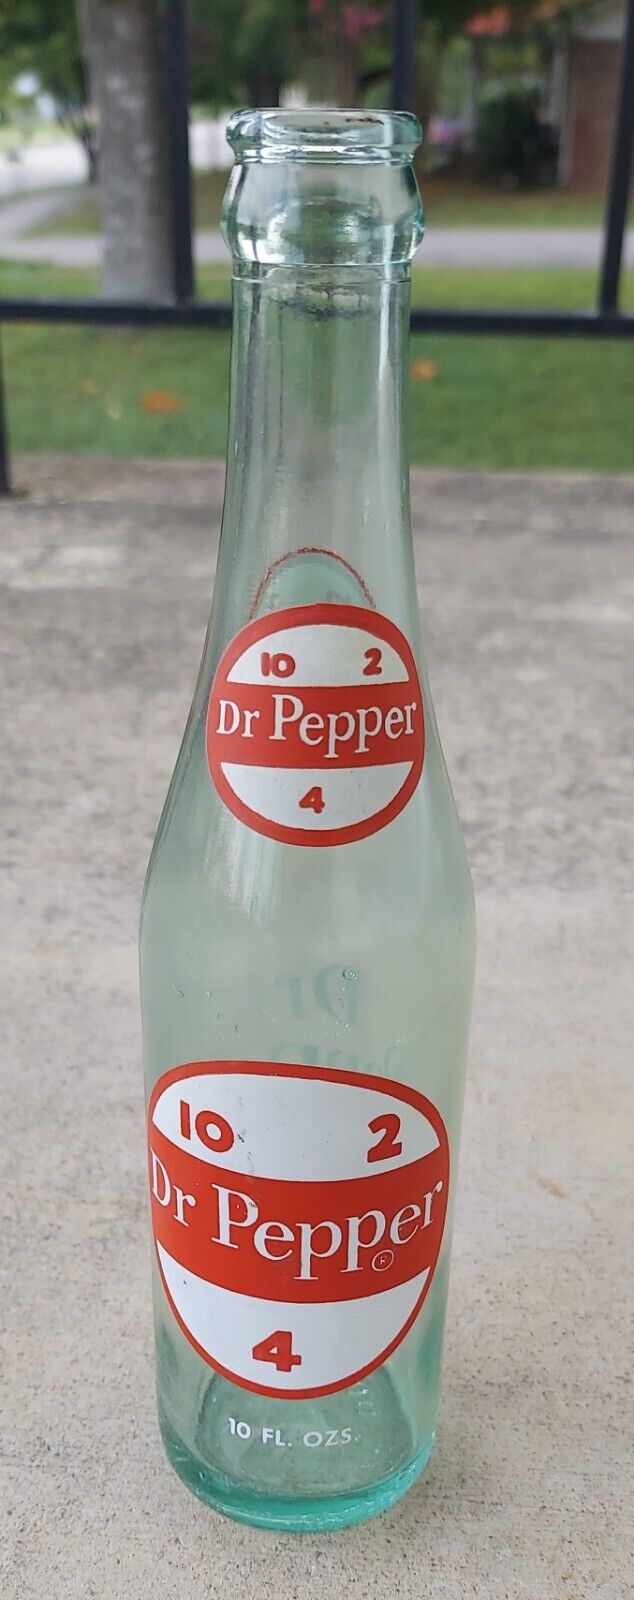 Vintage Dr. Pepper 10-2-4 Green Glass Bottle 10 Fl Oz 1960s - Early 1970s